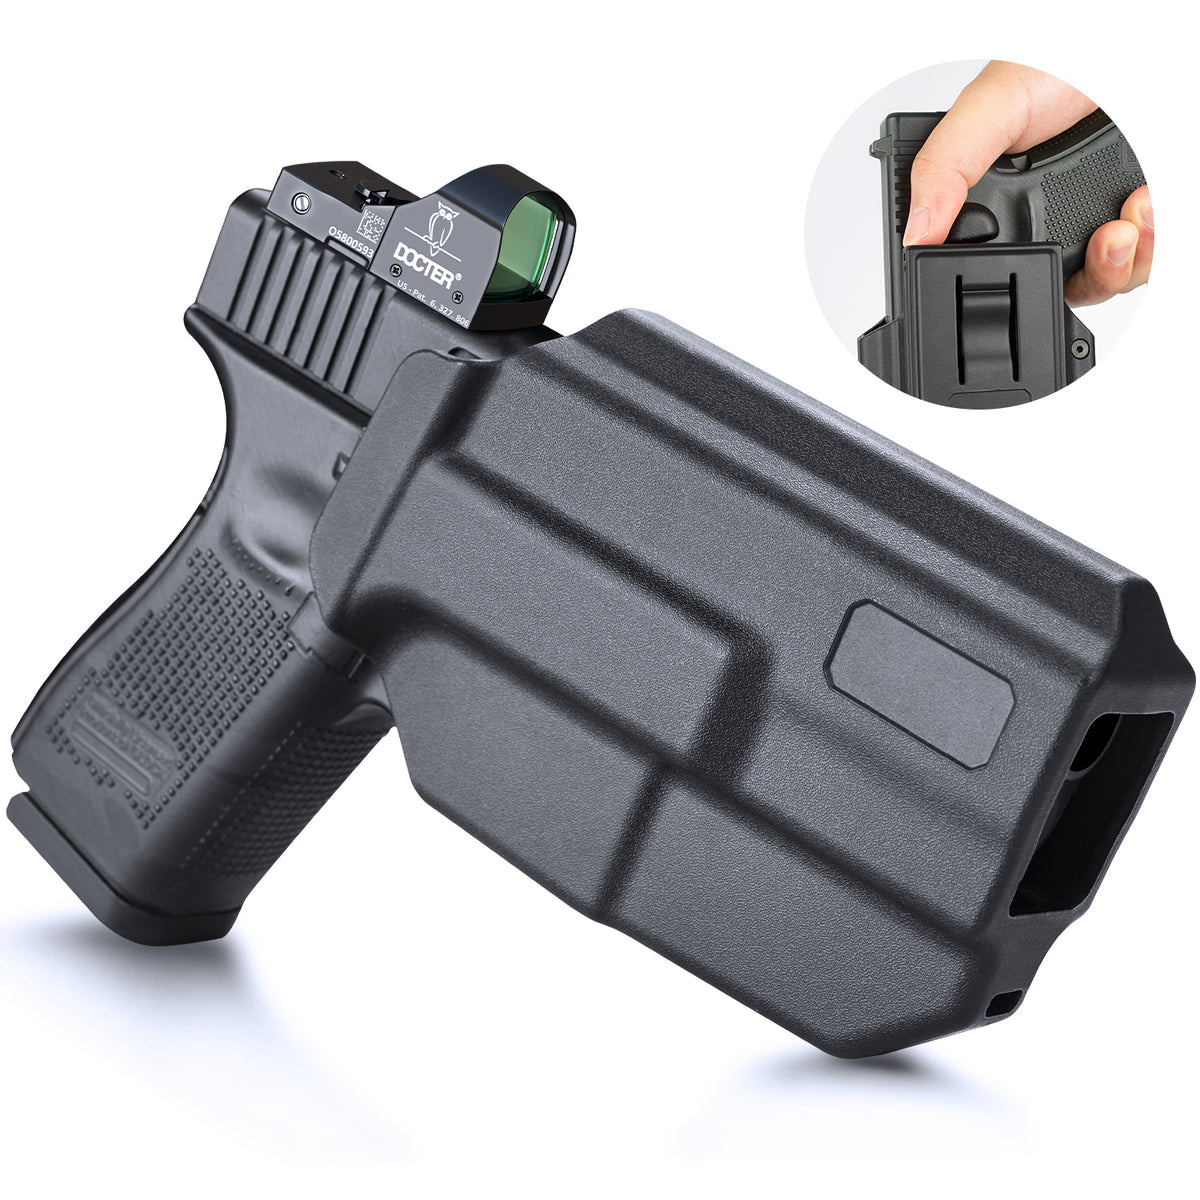 Level II Retention Thumb Release OWB Holster Glock 19 19X 26 44 45 Gen(1-5) 23 32 Gen(3-4) Polymer Holster with Red Dot Optics Cut